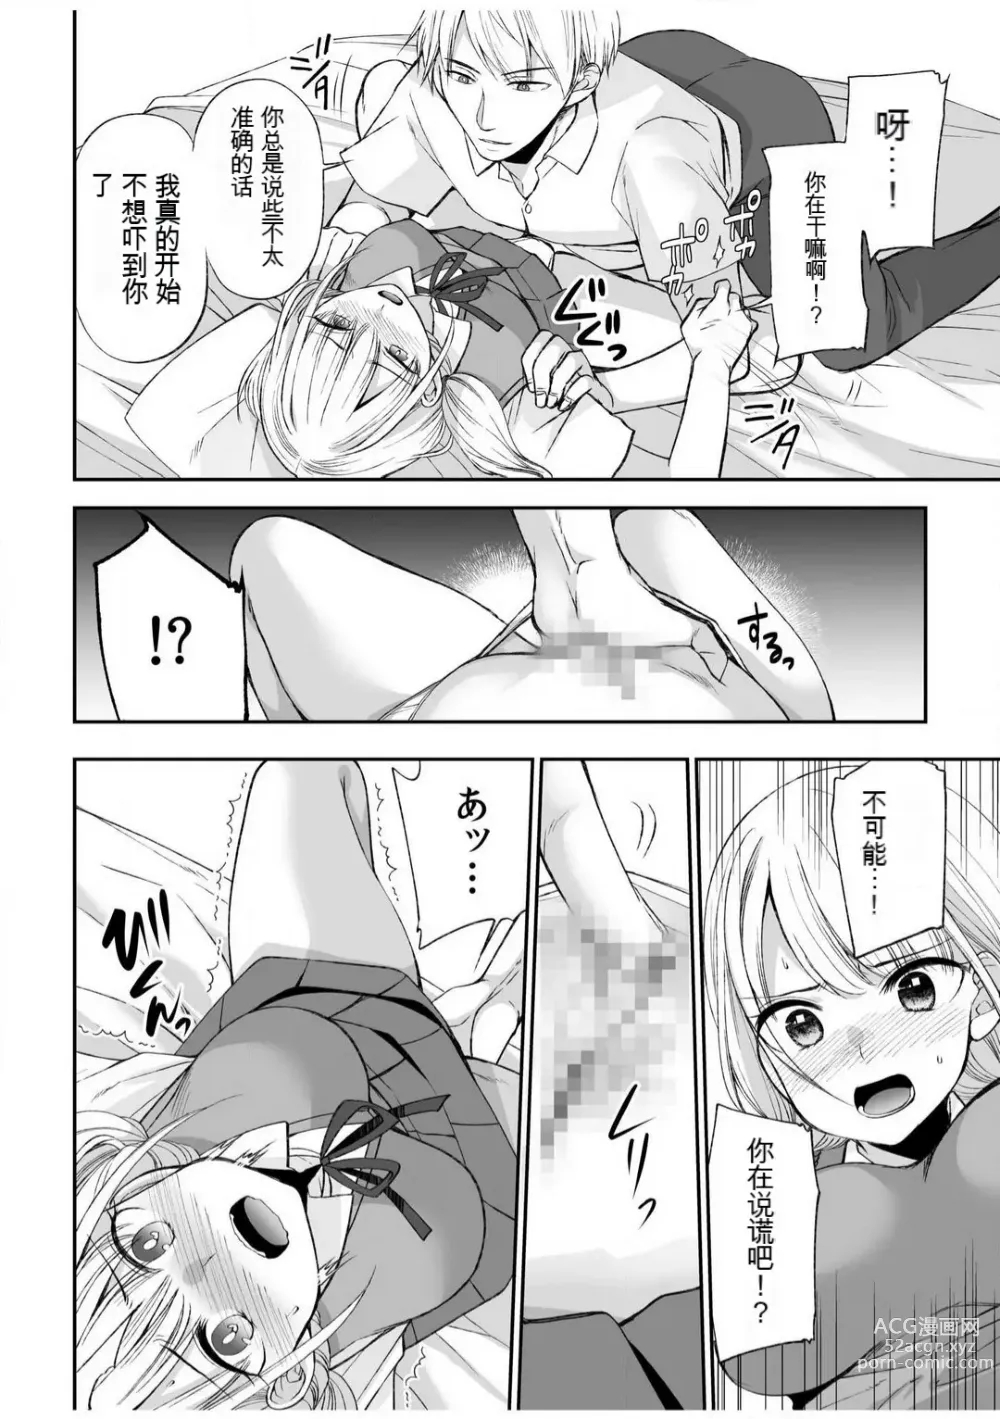 Page 13 of manga 「不要...不要进来太多...」〜冷酷攻略系的青梅竹马和义兄妹〜SEX〜【18禁】 1-10【GPT翻译】